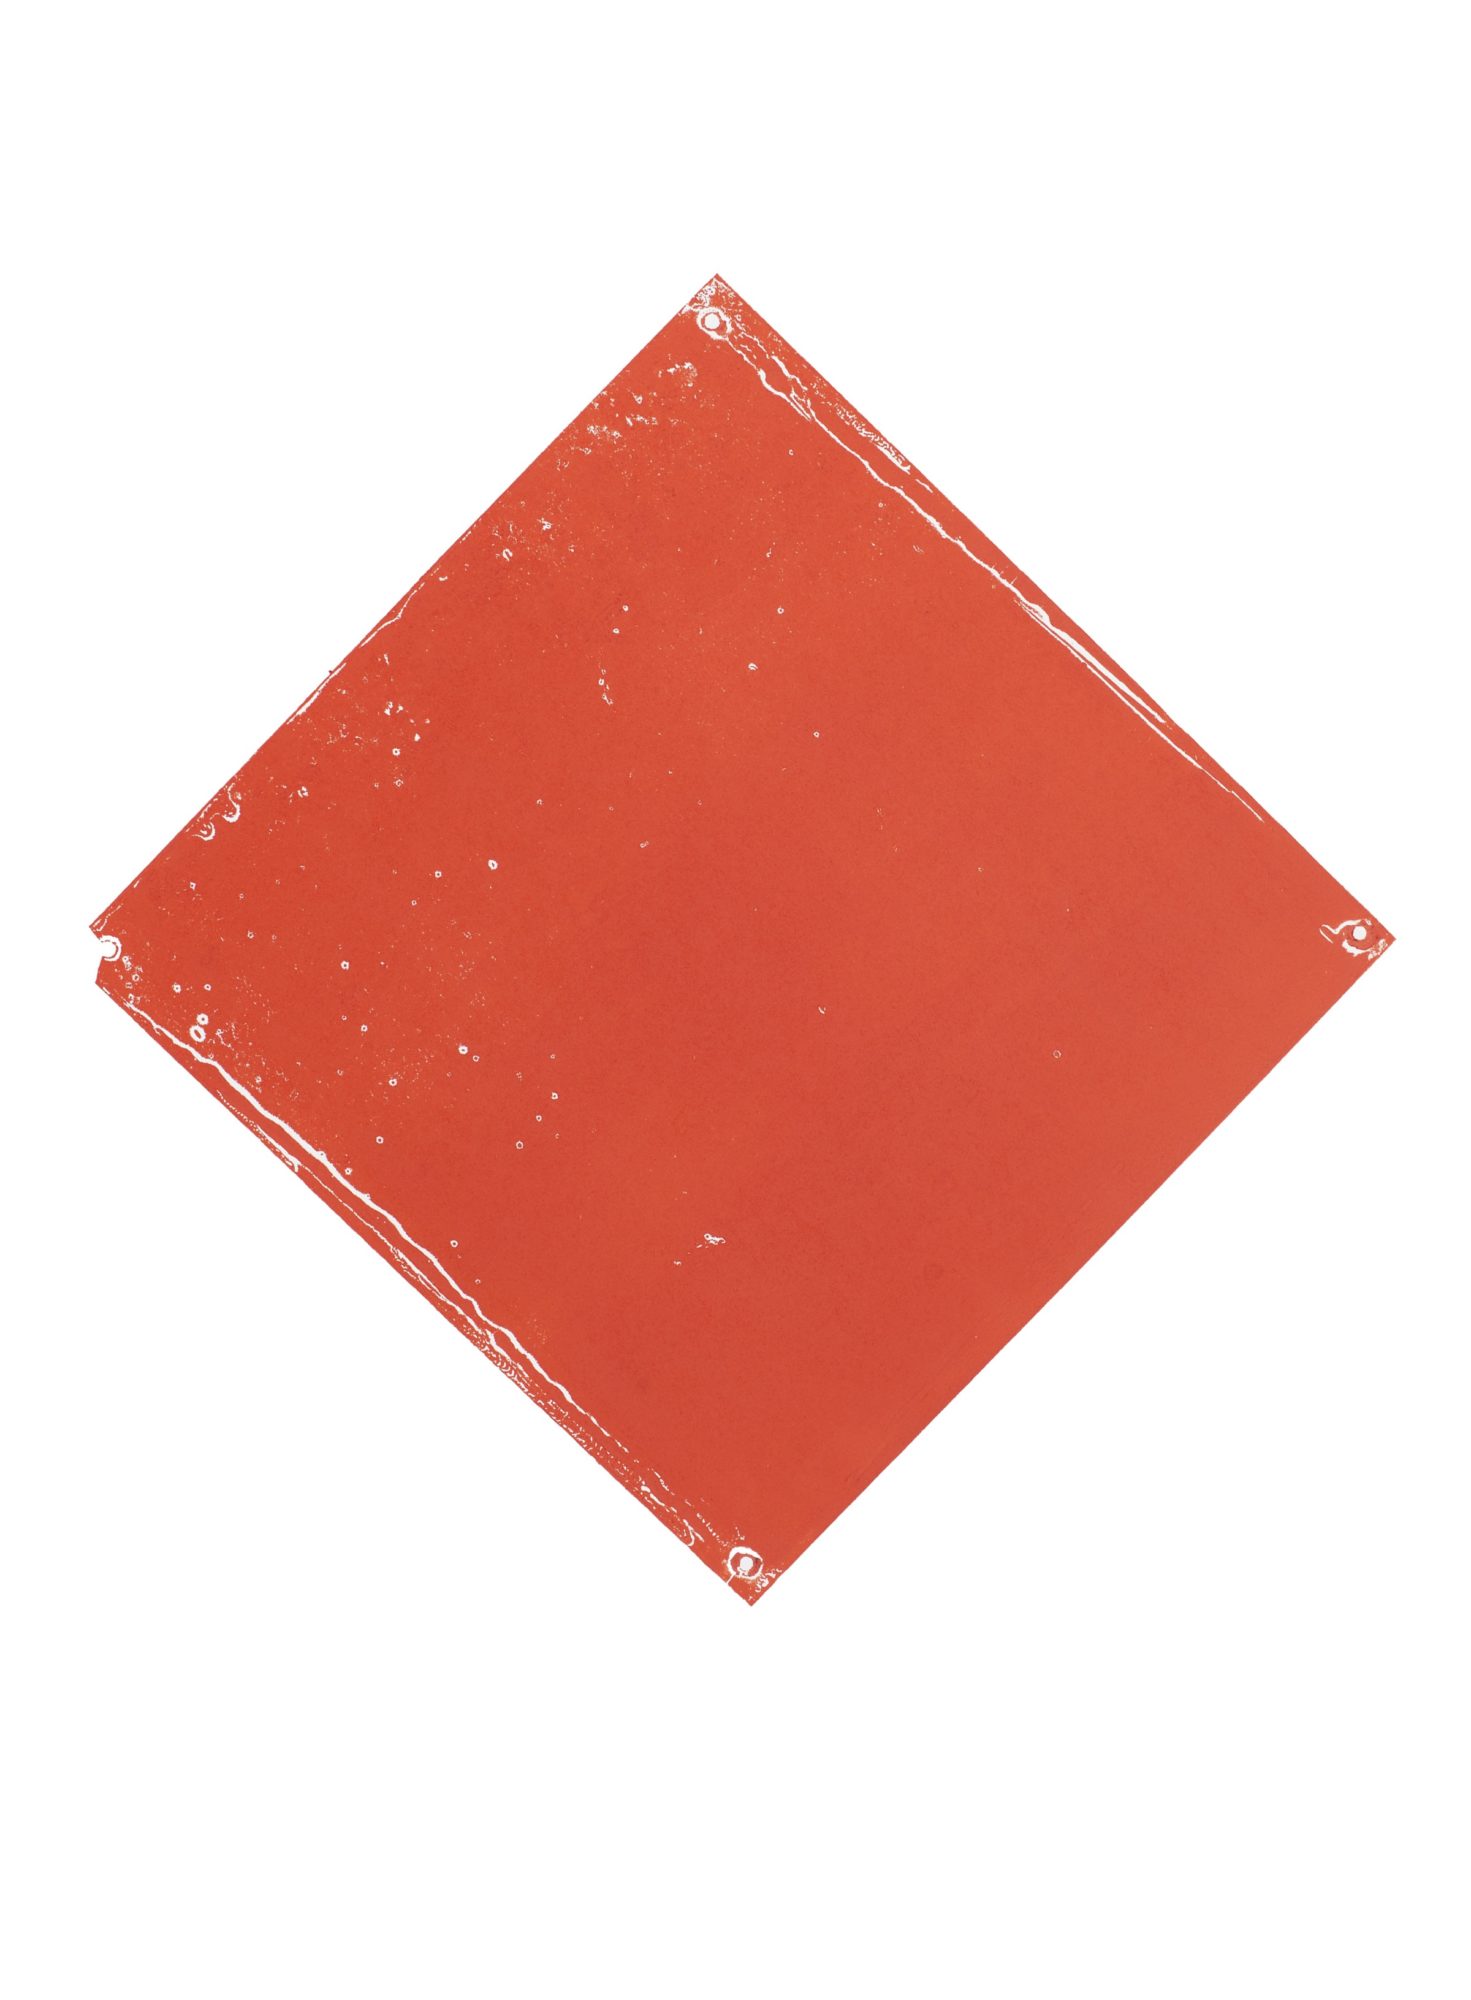 blood orange diamond shape with small white streaks near the edges on a white background